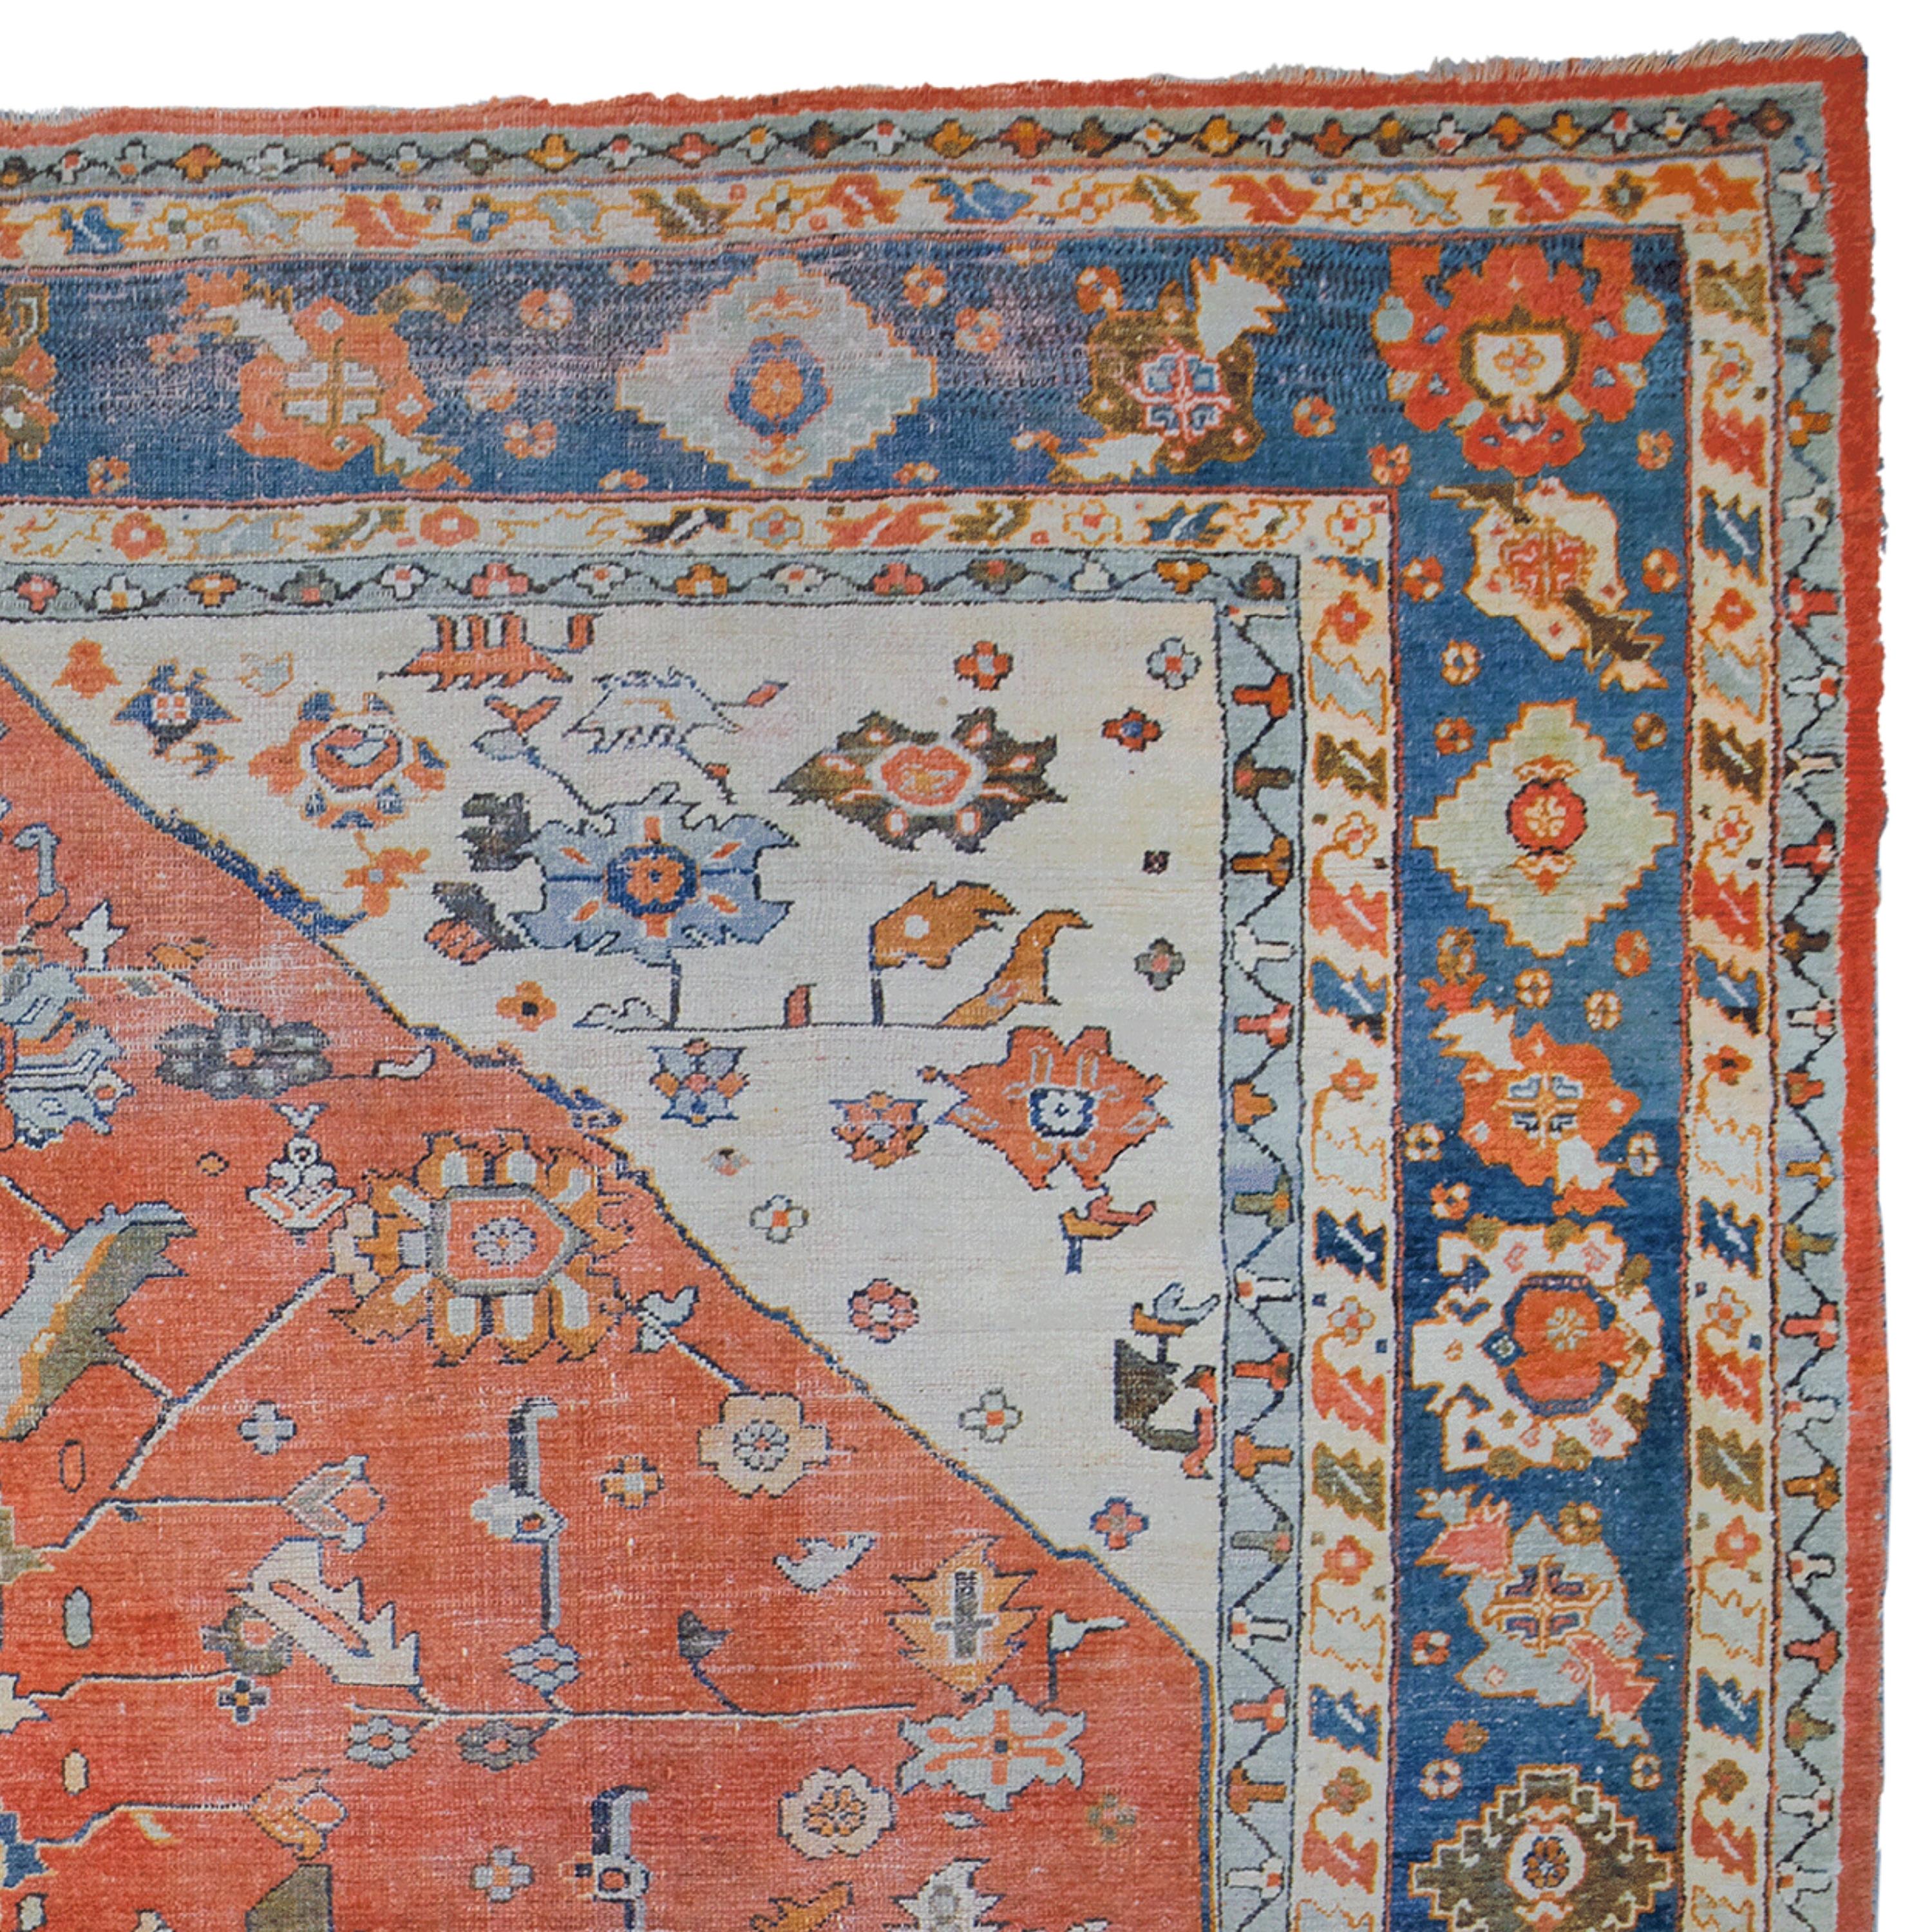 Wool Antique Ushak Carpet - Late 19th Century Turkish Ushak Carpet, Antique Carpet For Sale